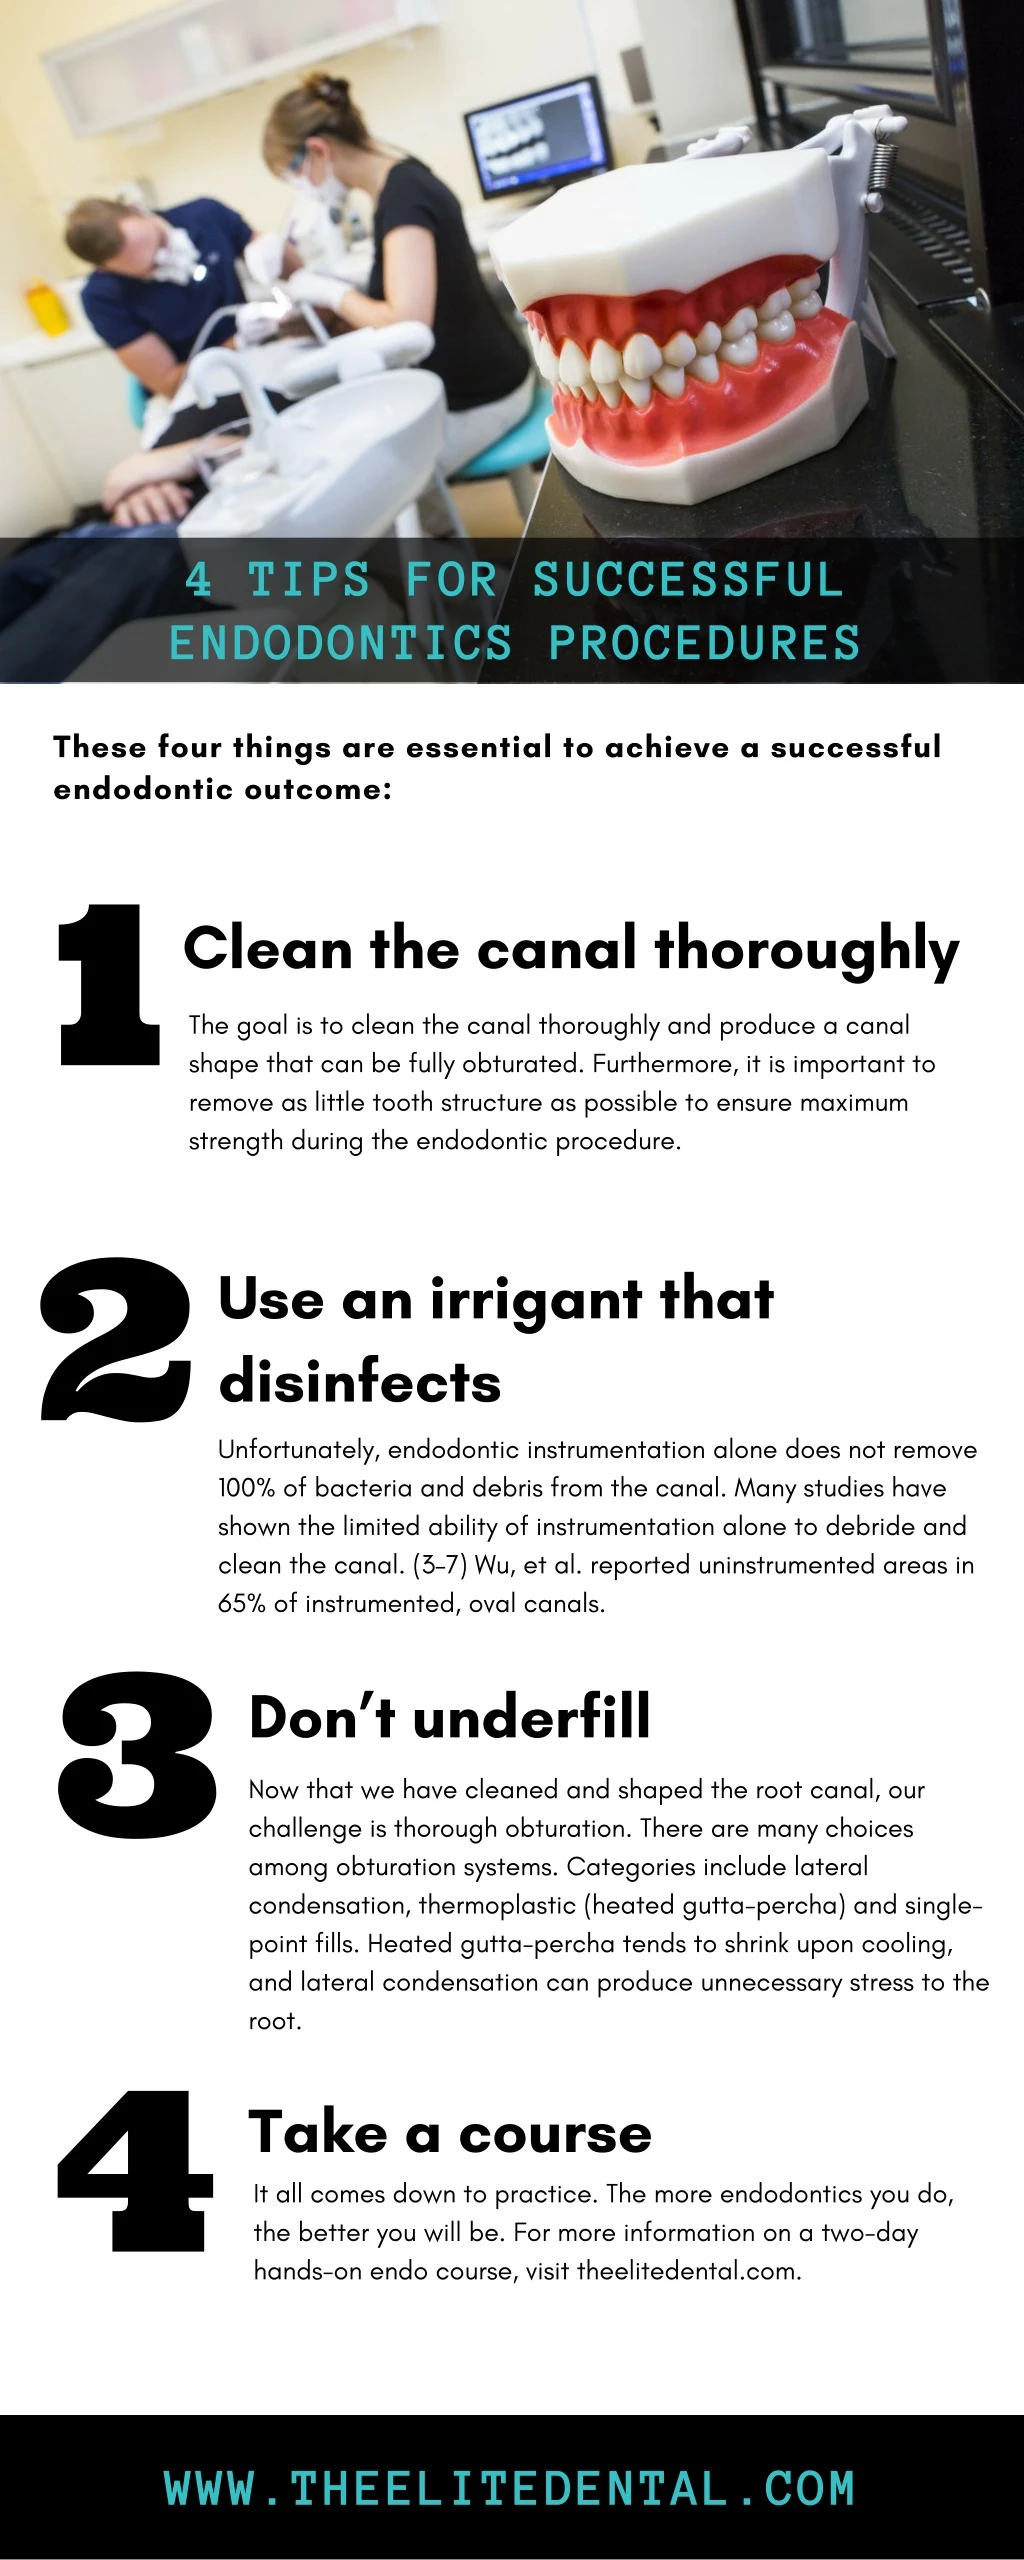 4 tips for successful endodontics procedures